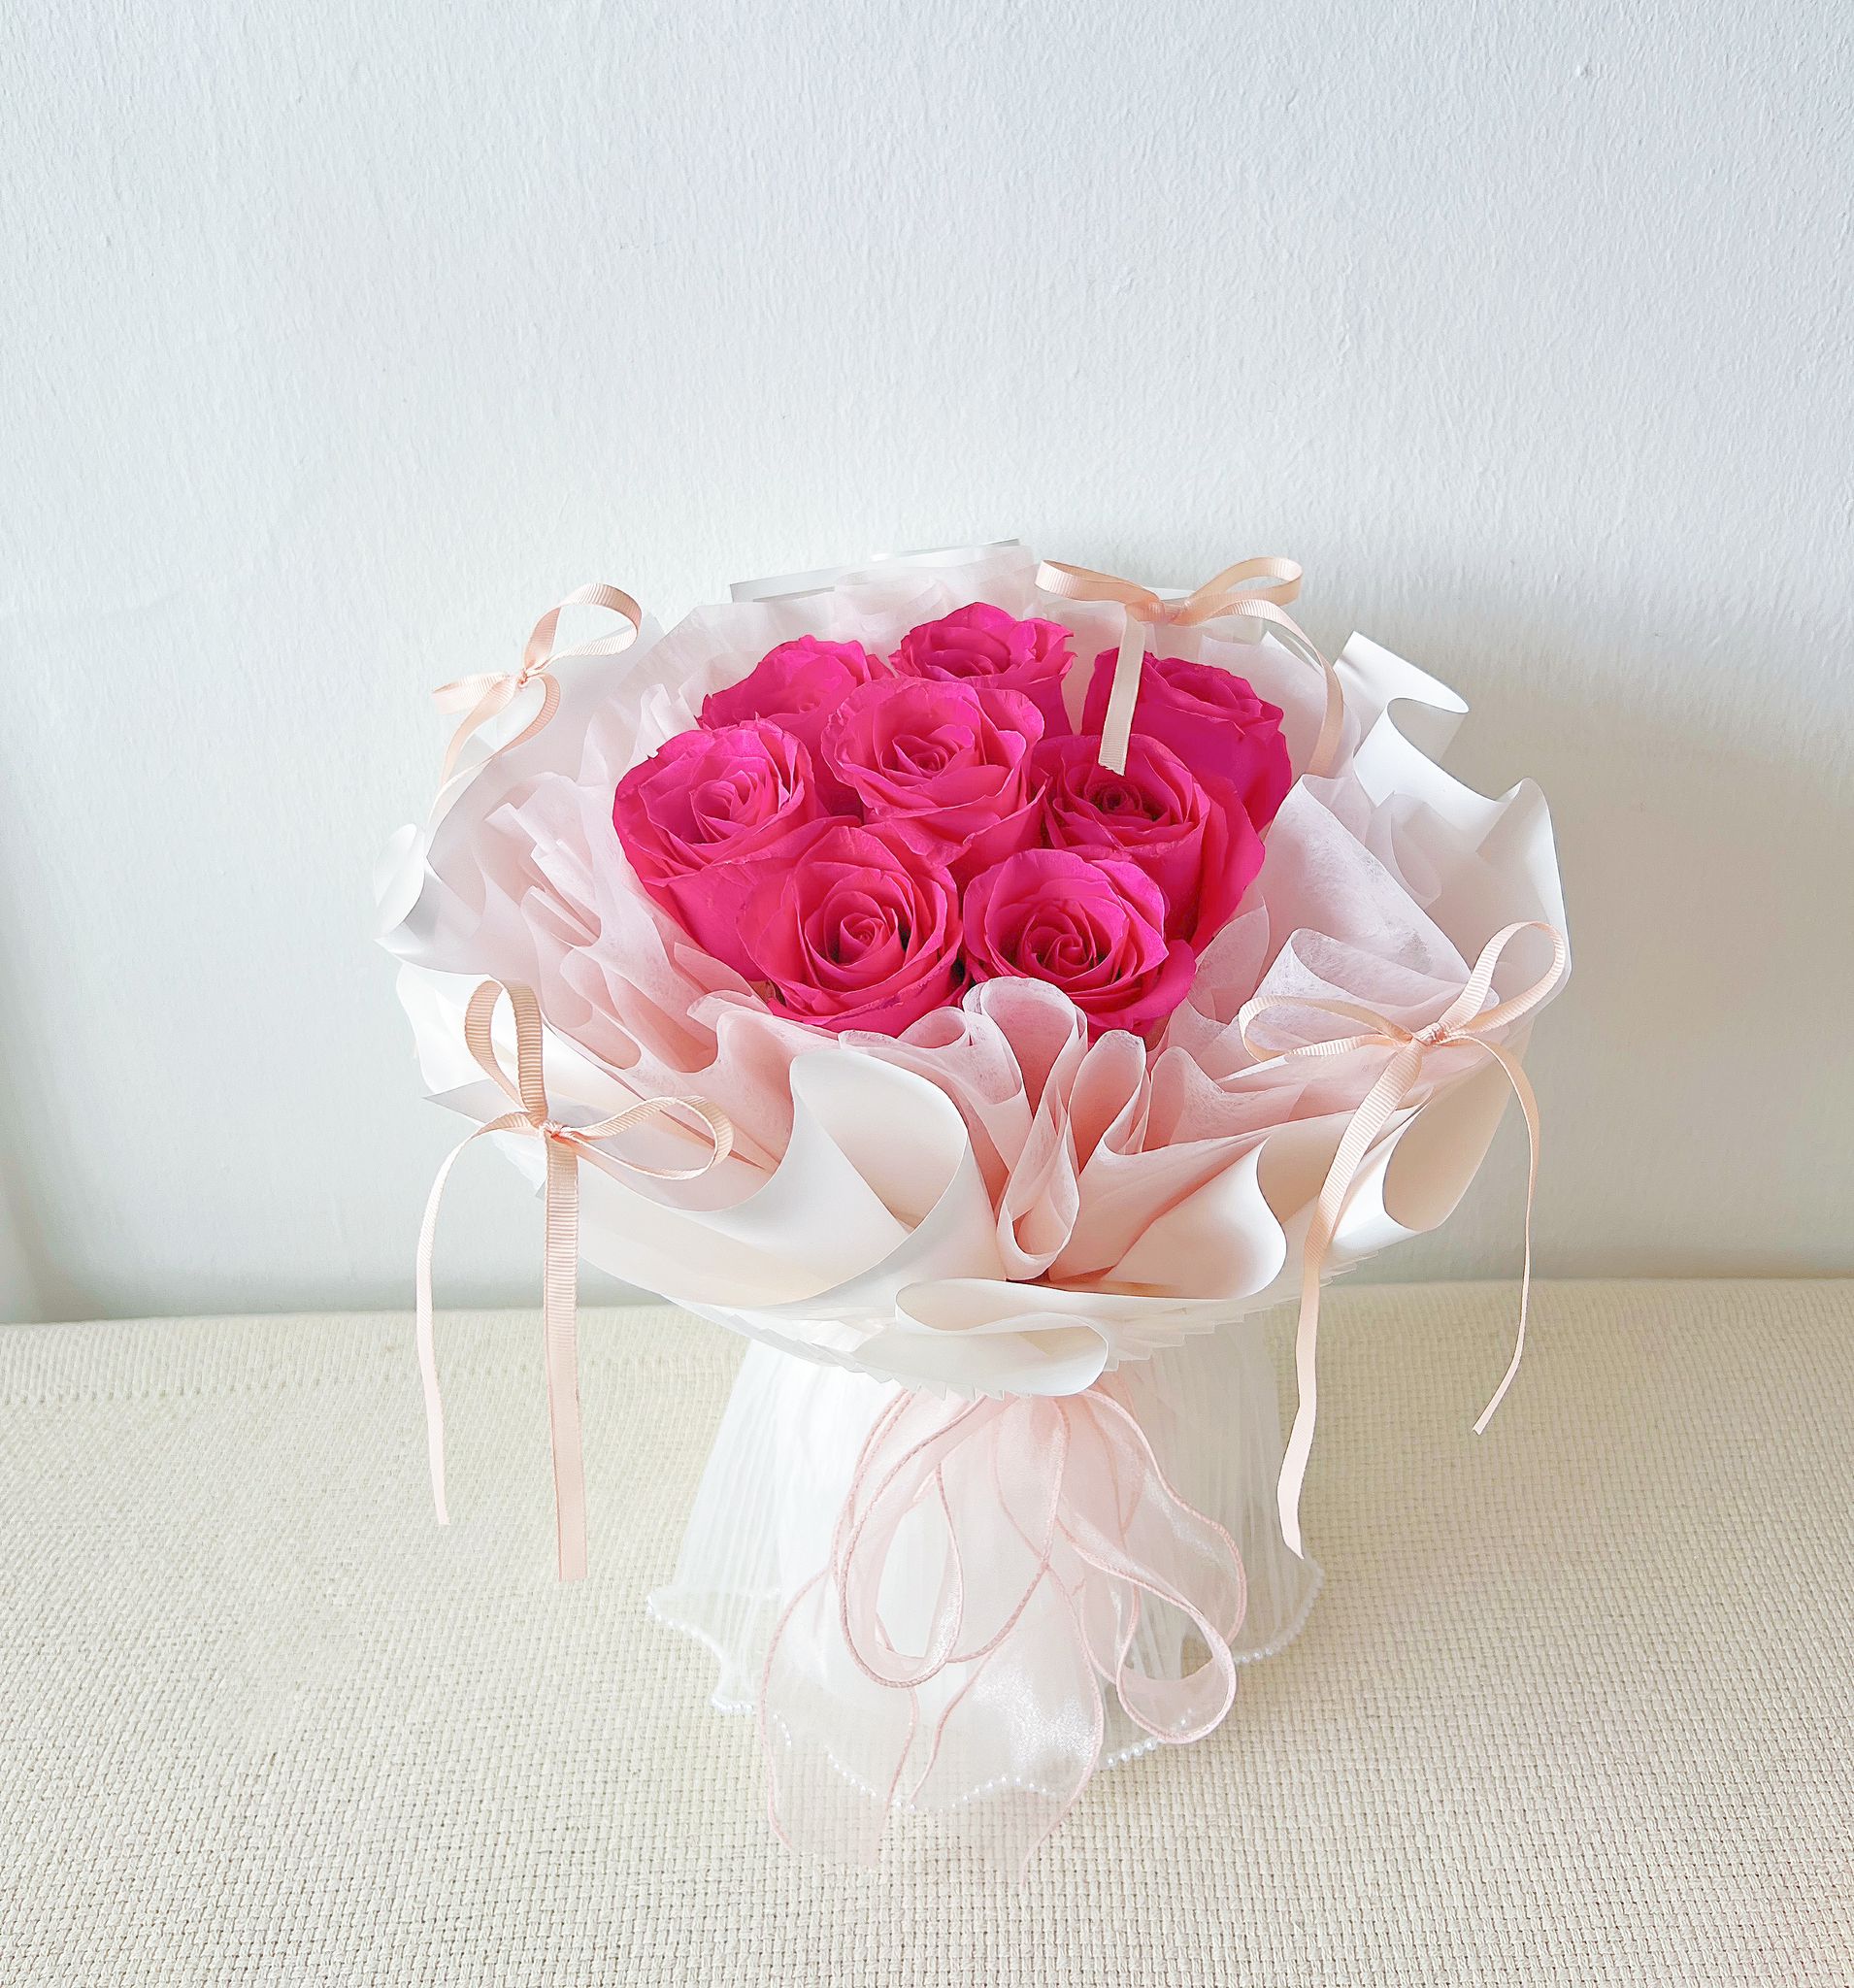 Valentine's Day Special Promotion - Pink Rose Bouquet | LnL Florist